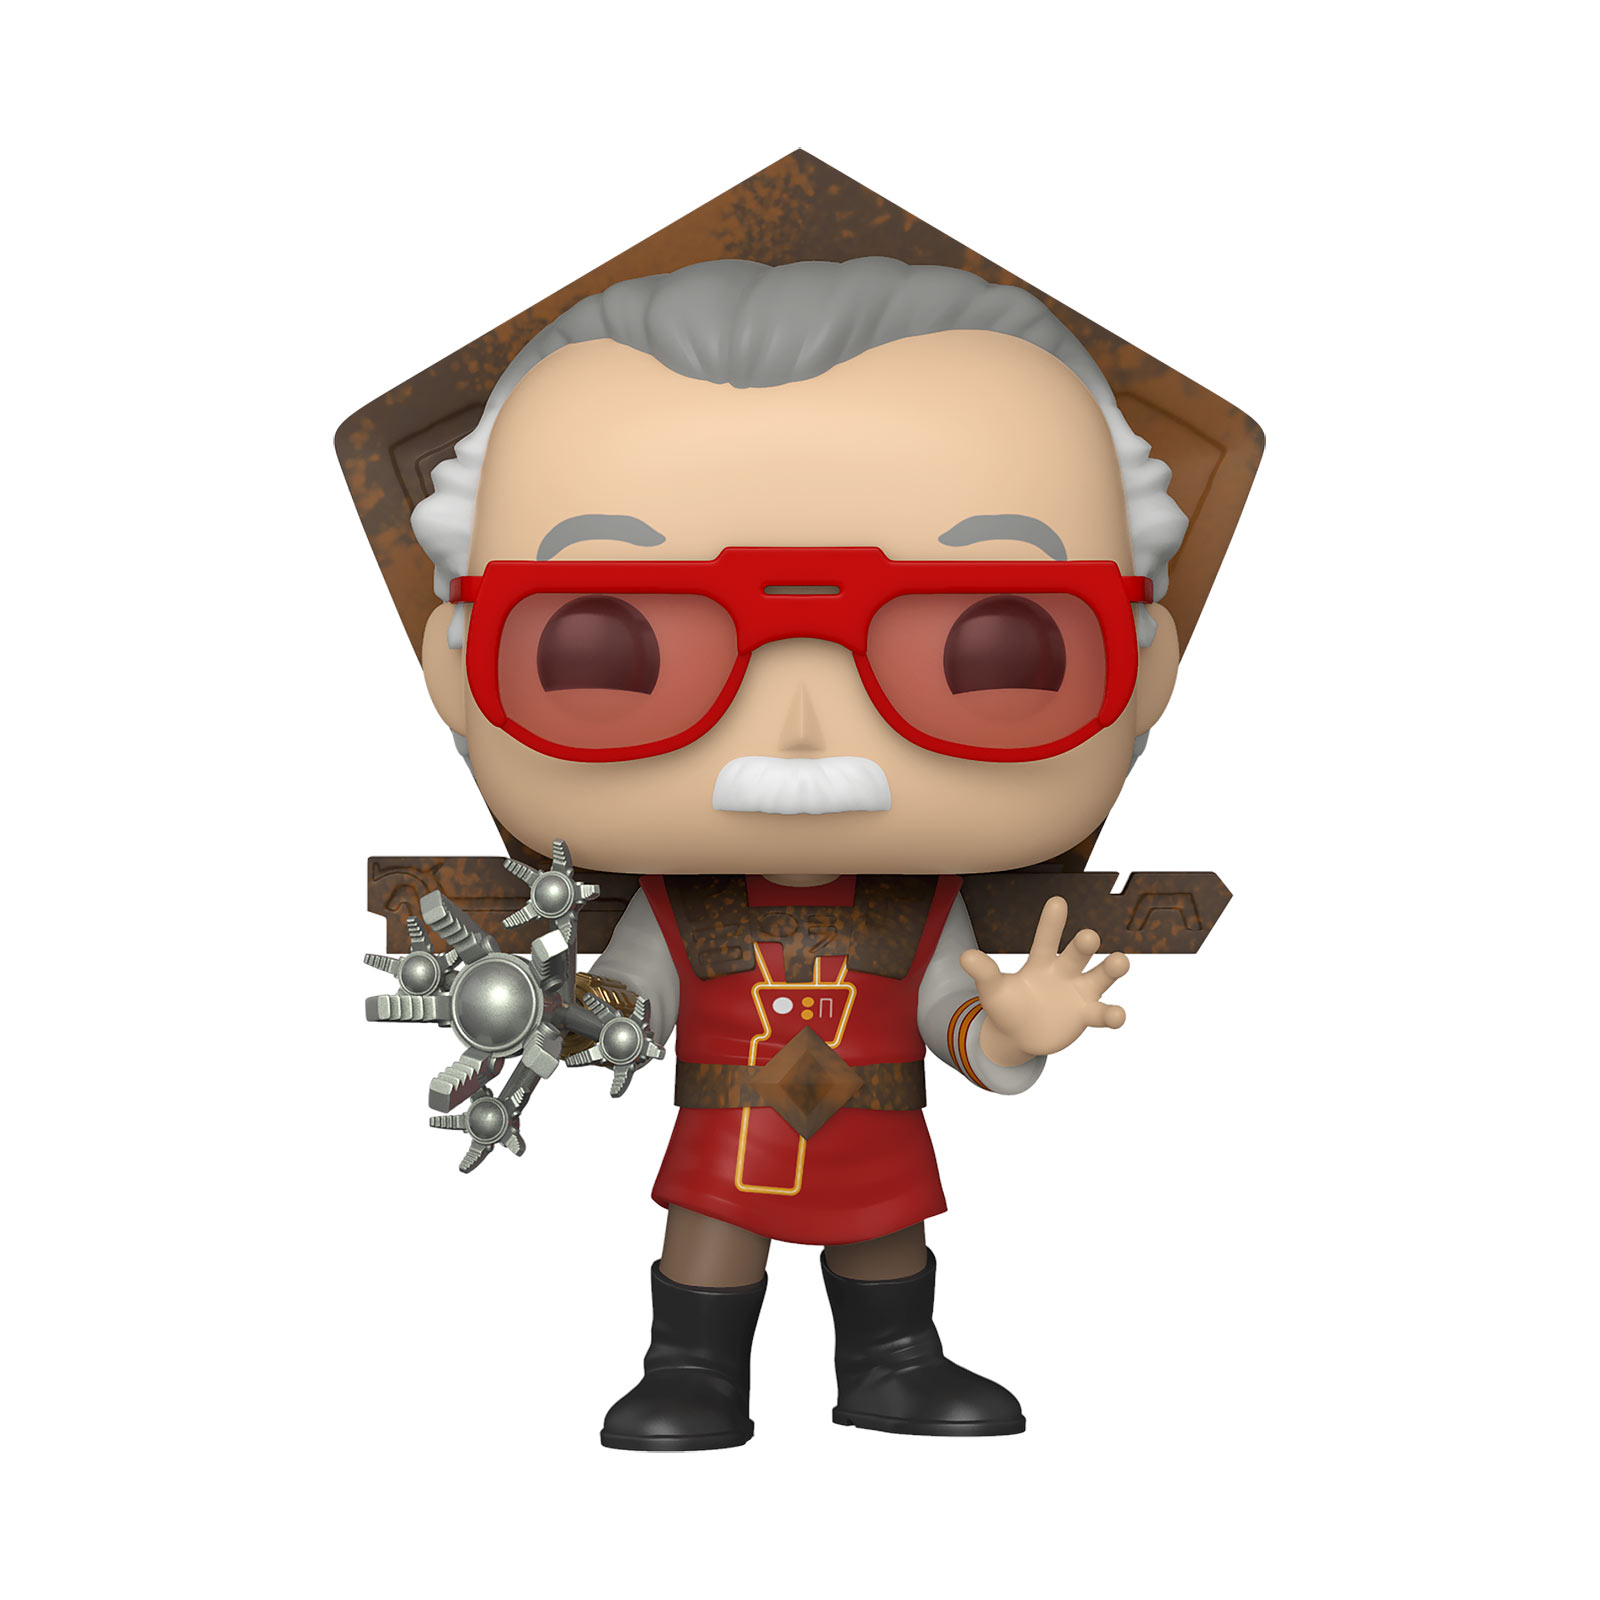 Thor - Stan Lee in Ragnarok Outfit Funko Pop Wackelkopf-Figur